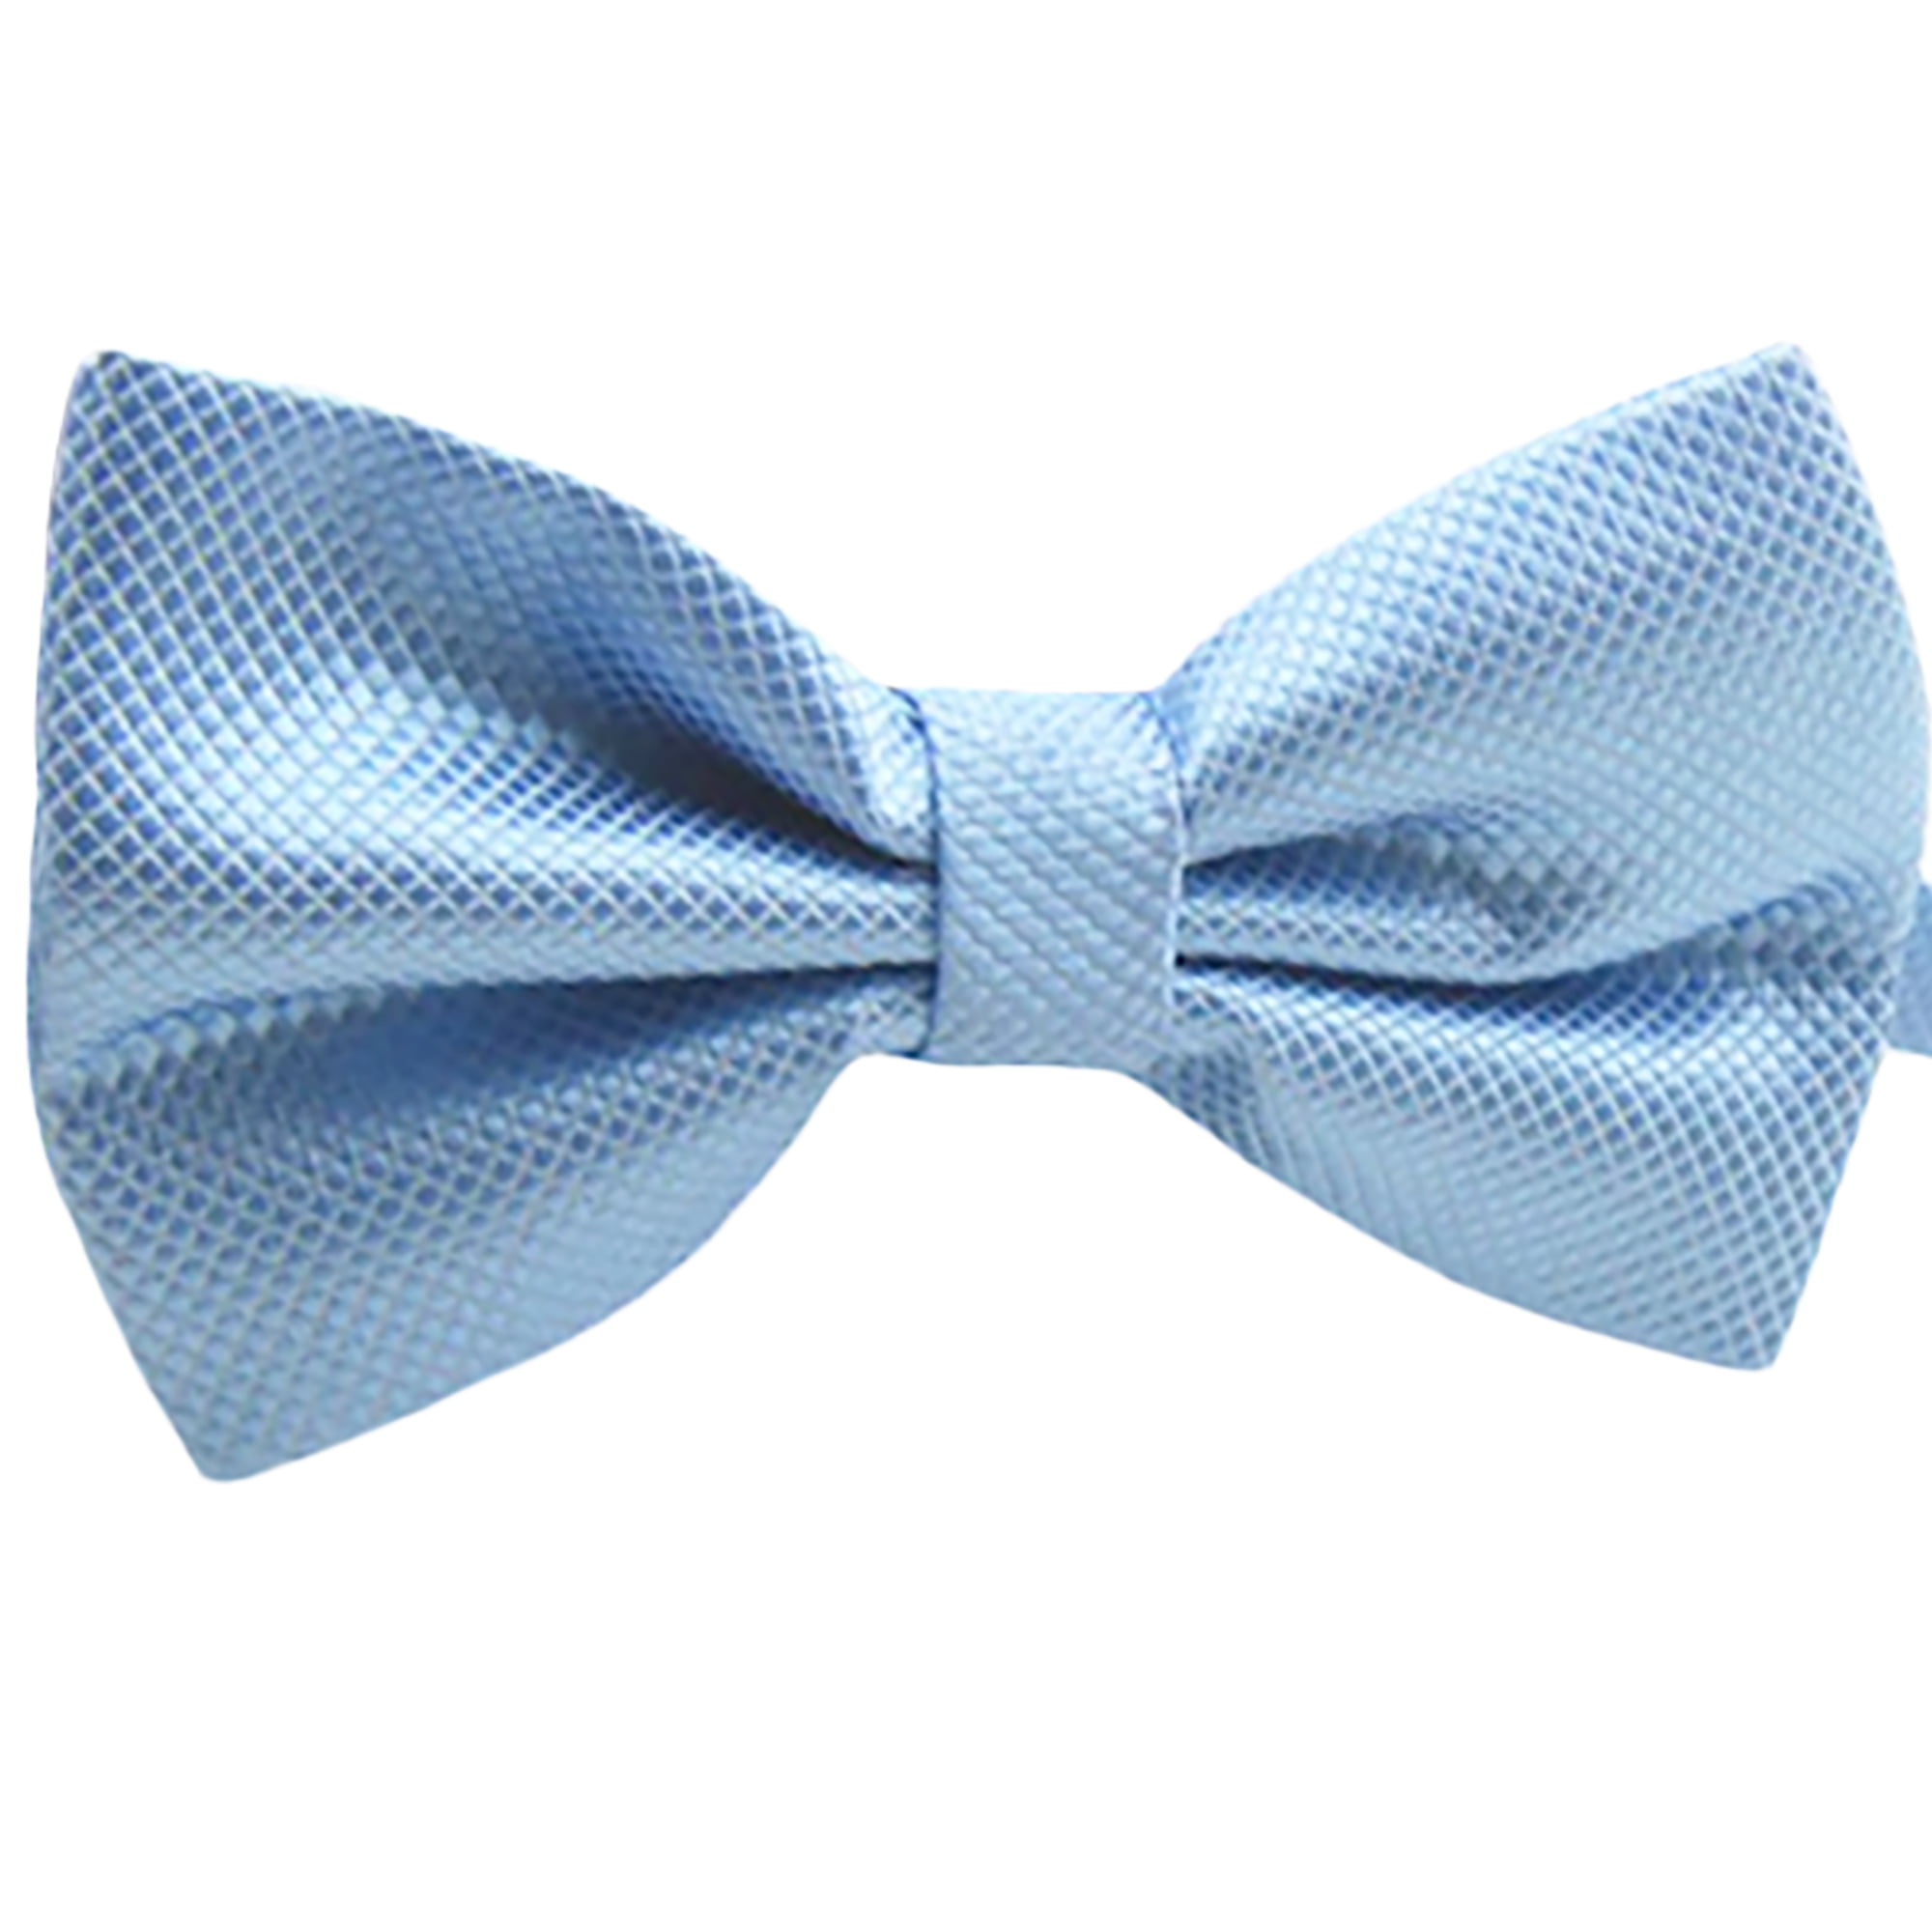 Mens Pre-Tied Blue Bow Tie for Formal Events - Walmart.com